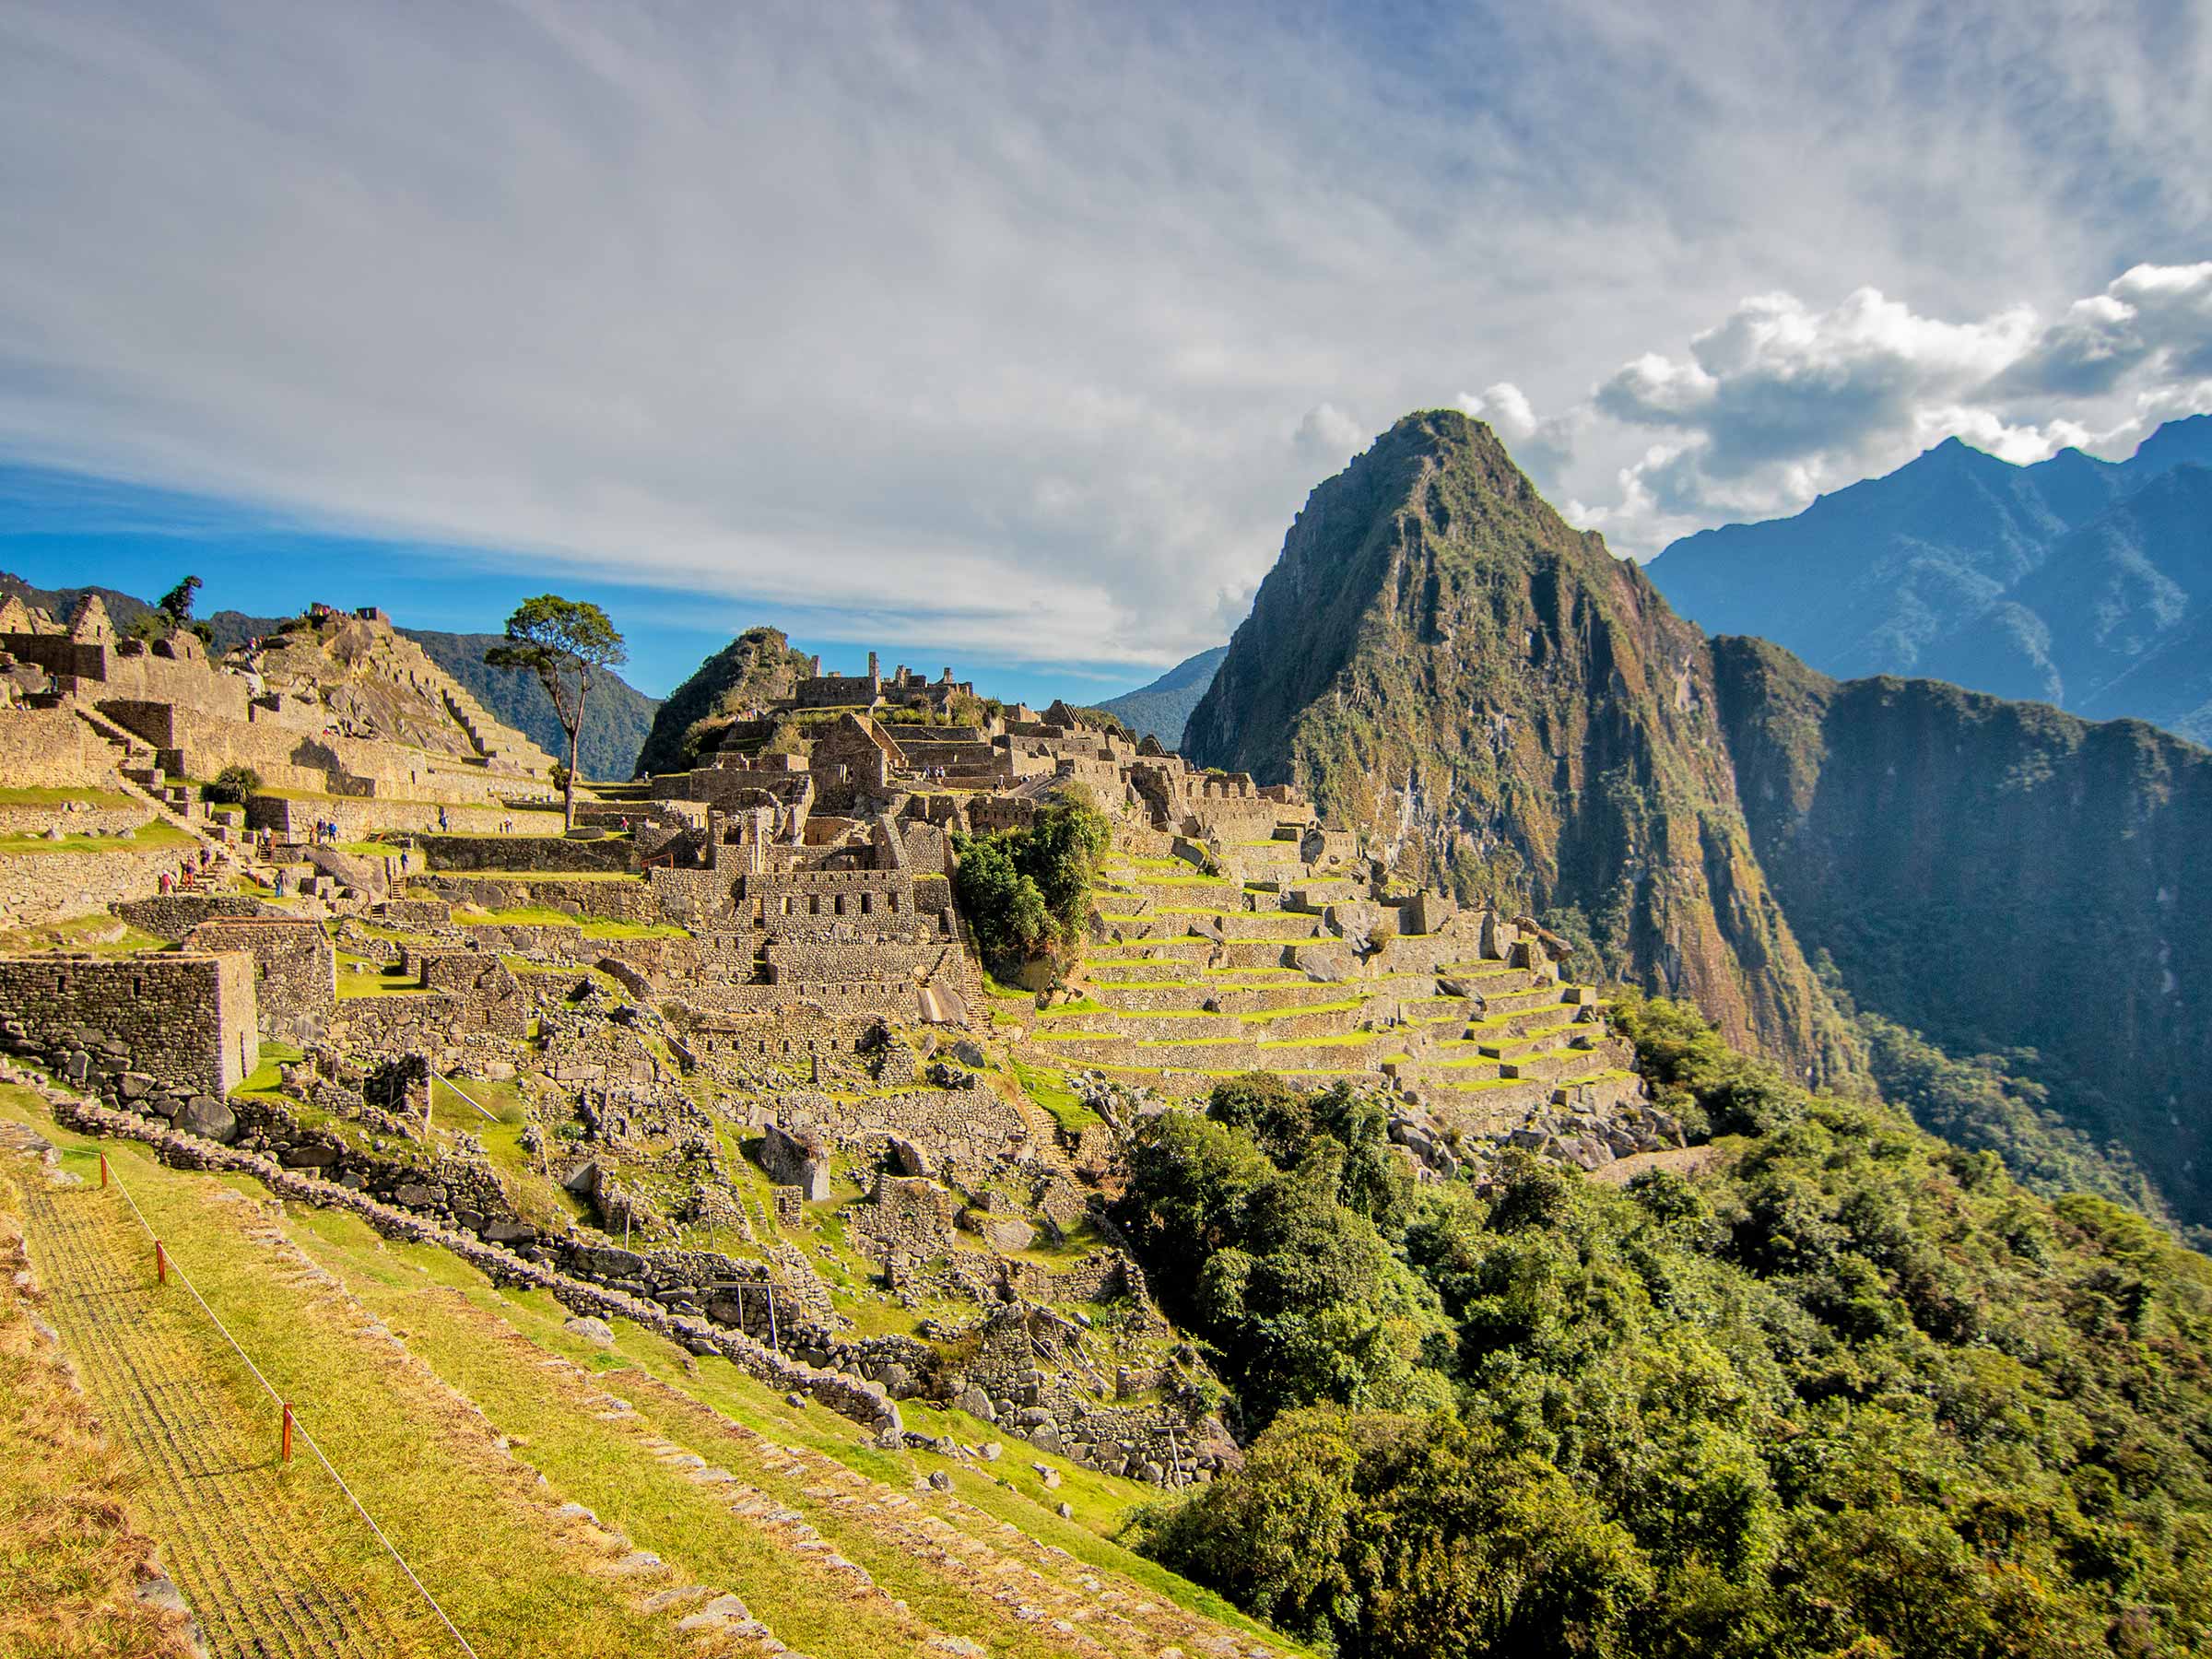 The Antanuca Experience with Yanaqocha Lake and Machu Picchu  4 days / 3 nights